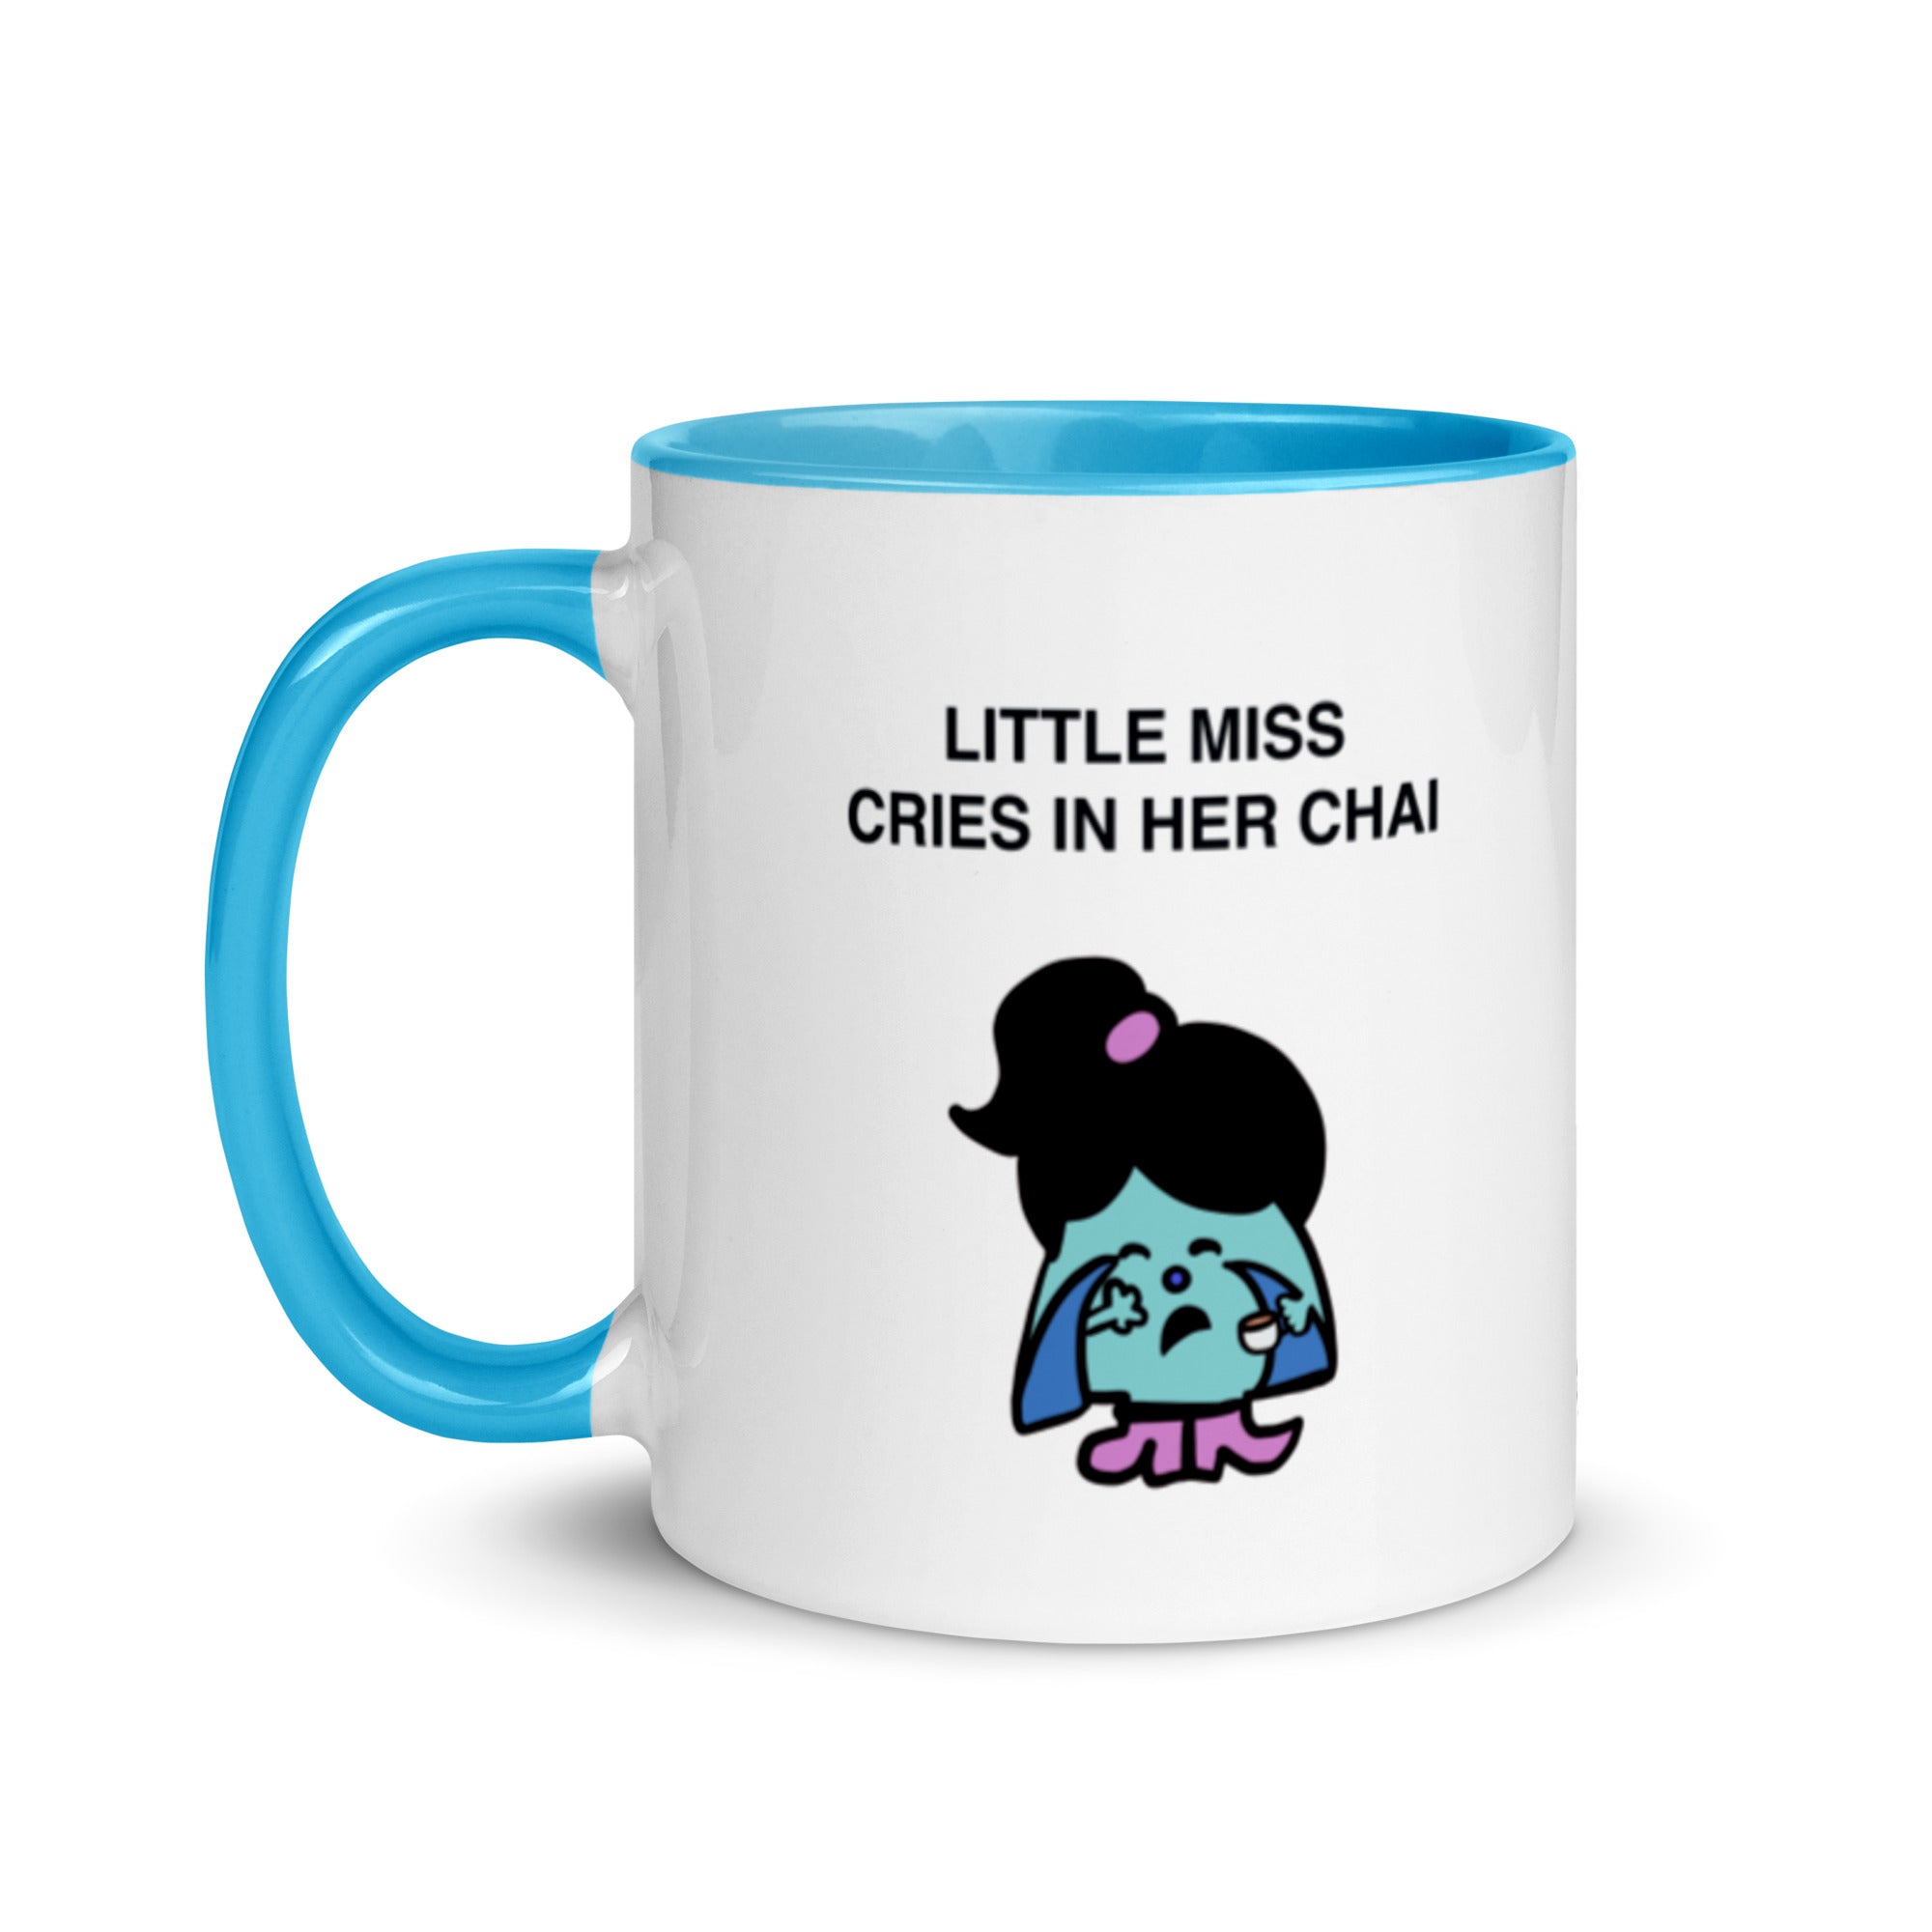 Chai Boss Mug